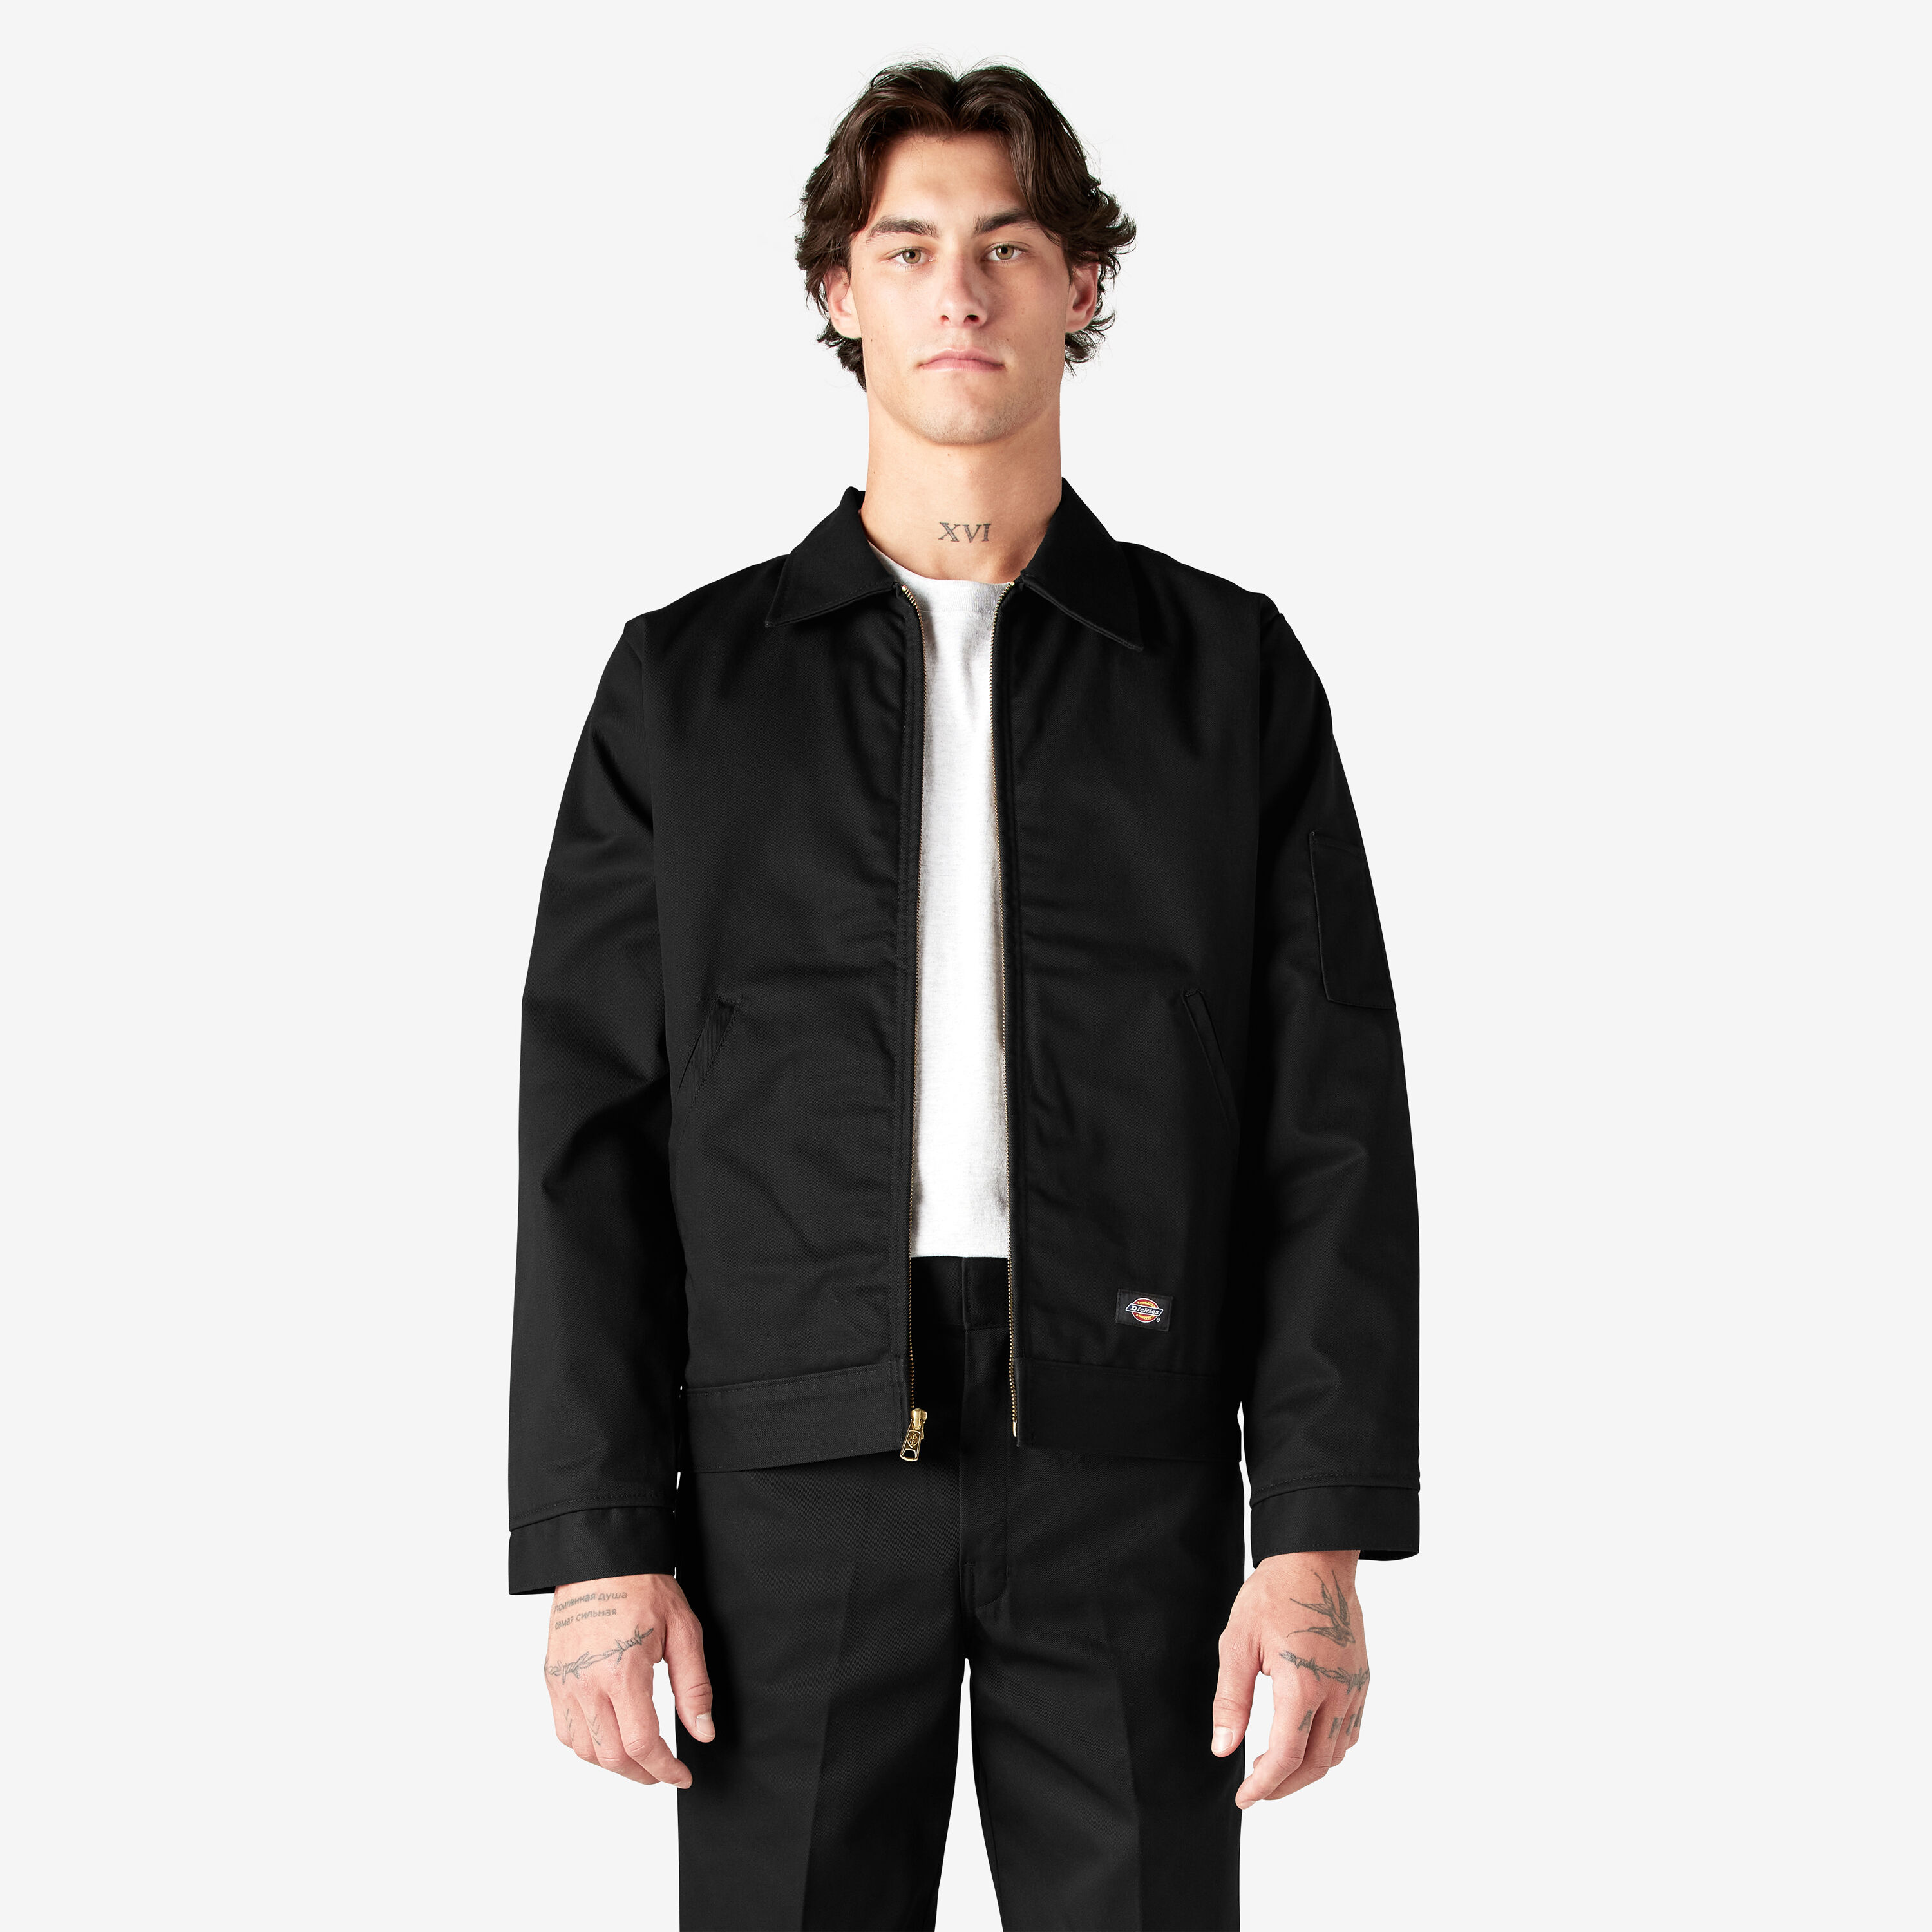 Men's Outerwear – Work Coats & Jackets | Dickies